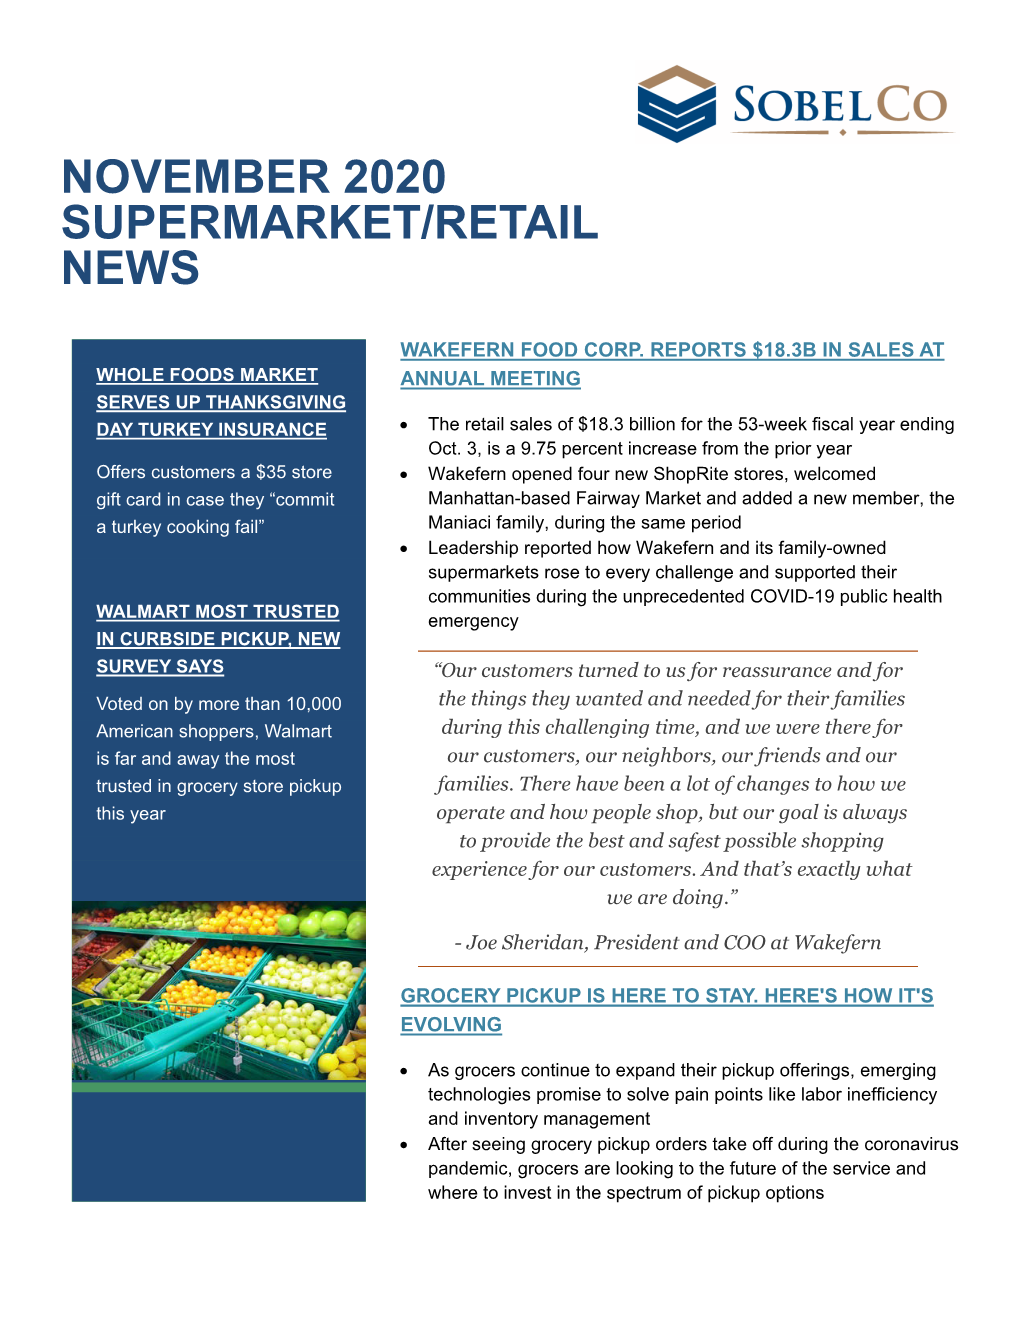 November 2020 Supermarket/Retail News